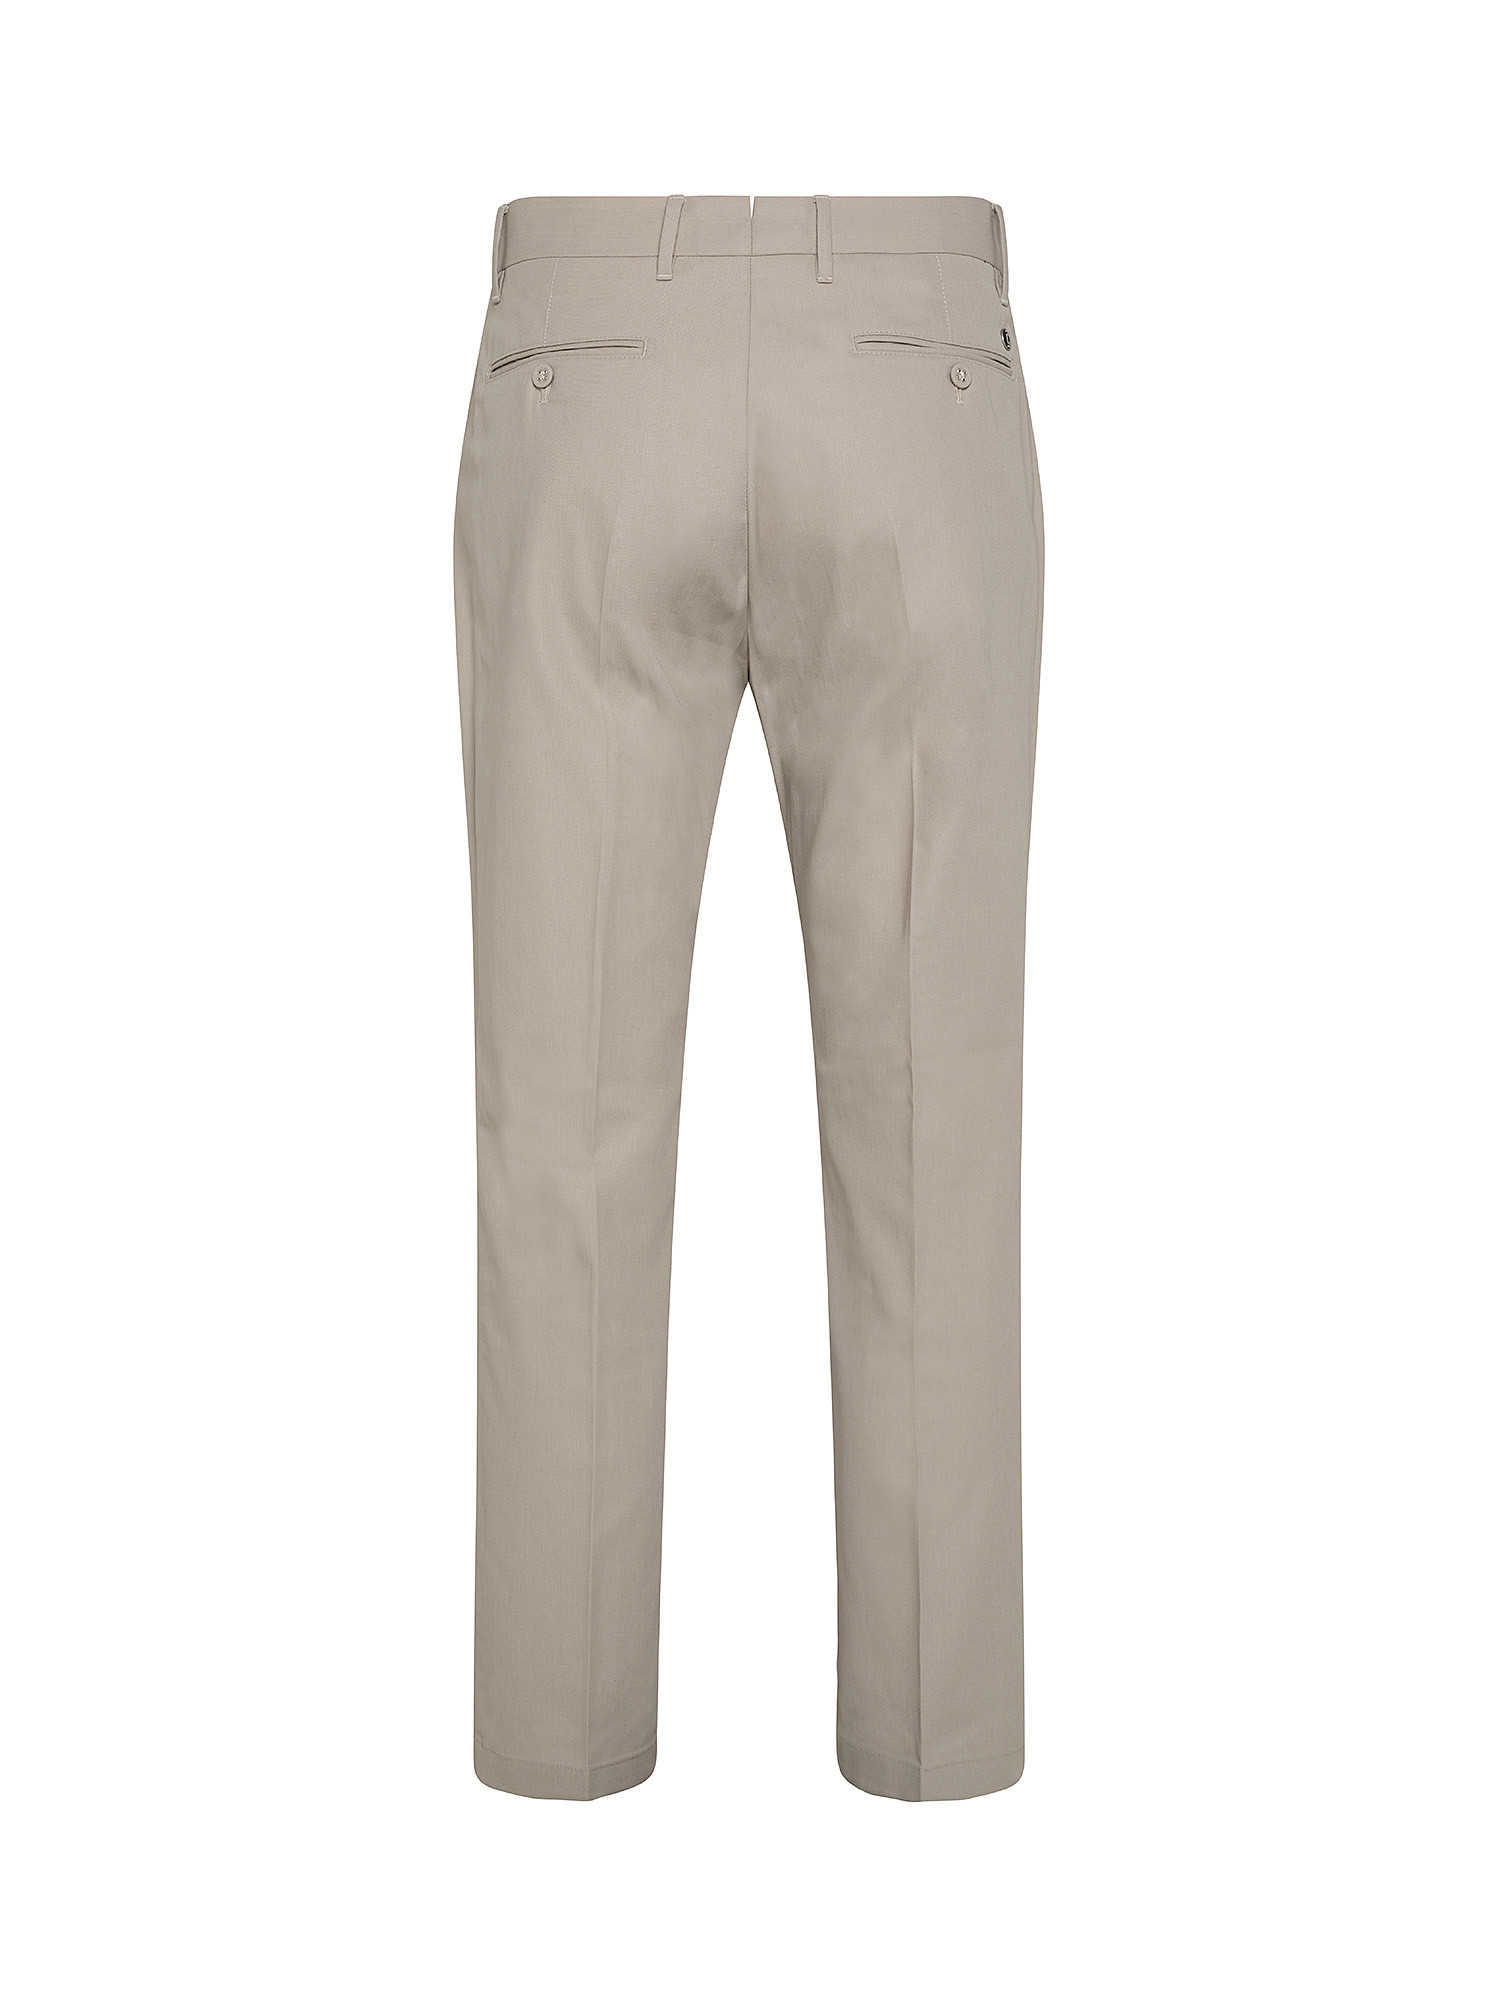 Atelier Pants, Light Grey, large image number 1